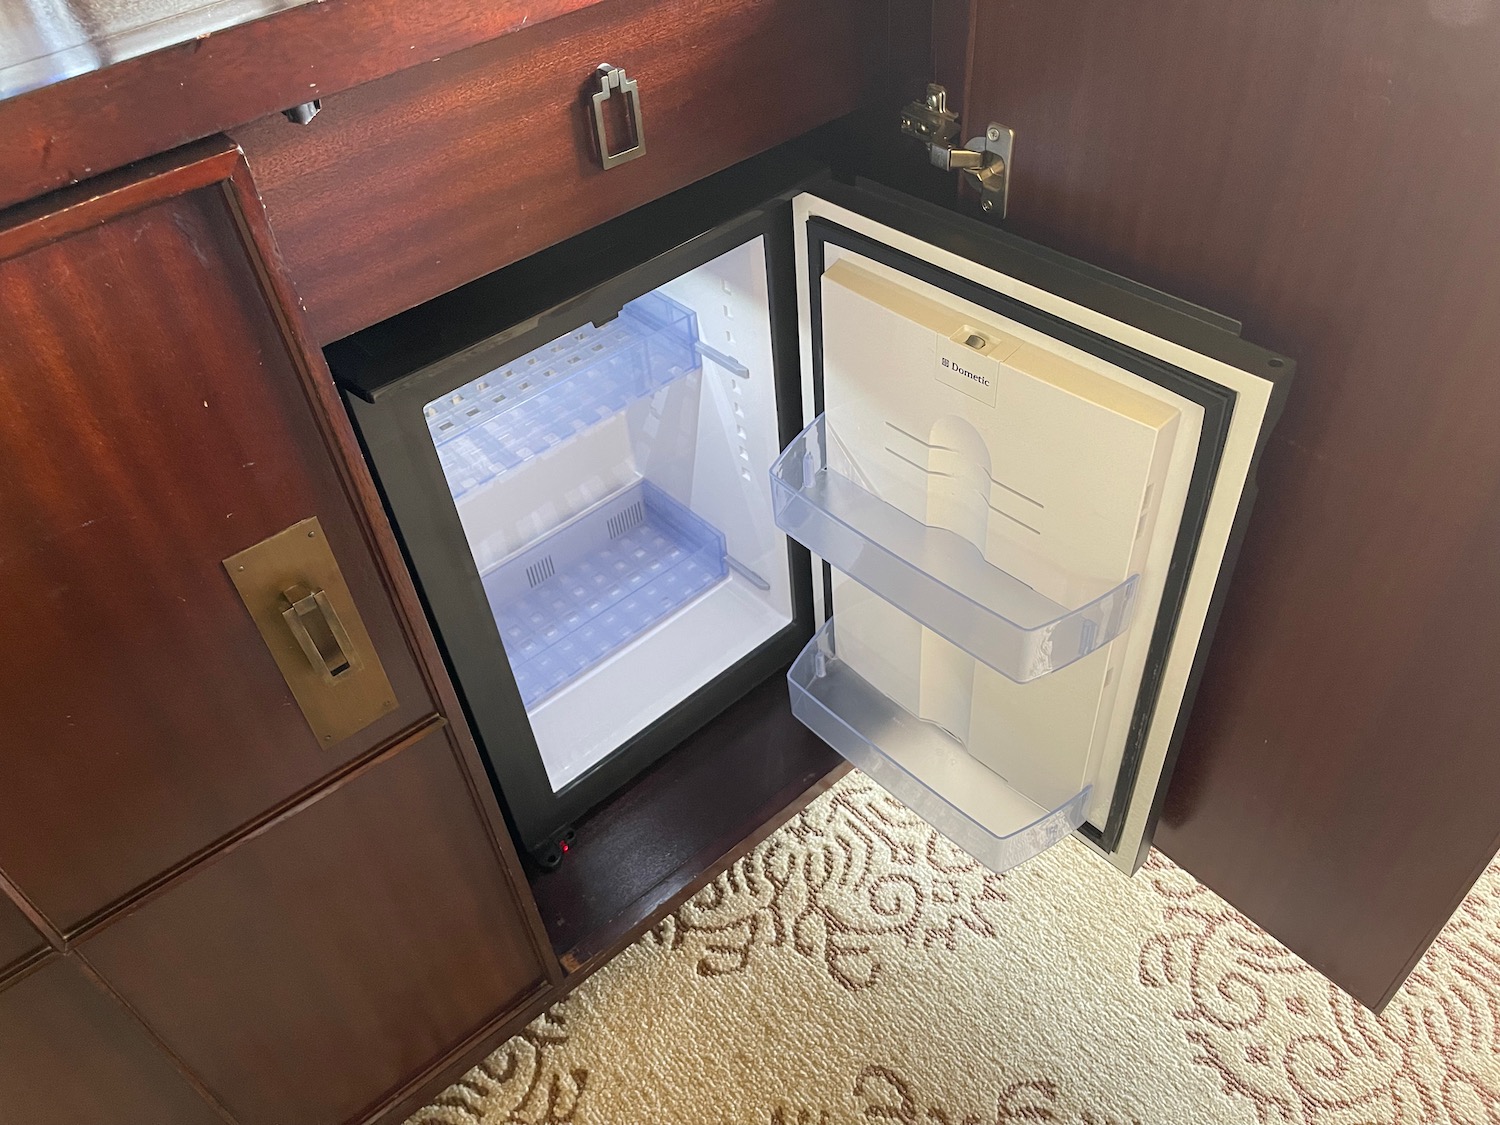 a small refrigerator in a cabinet